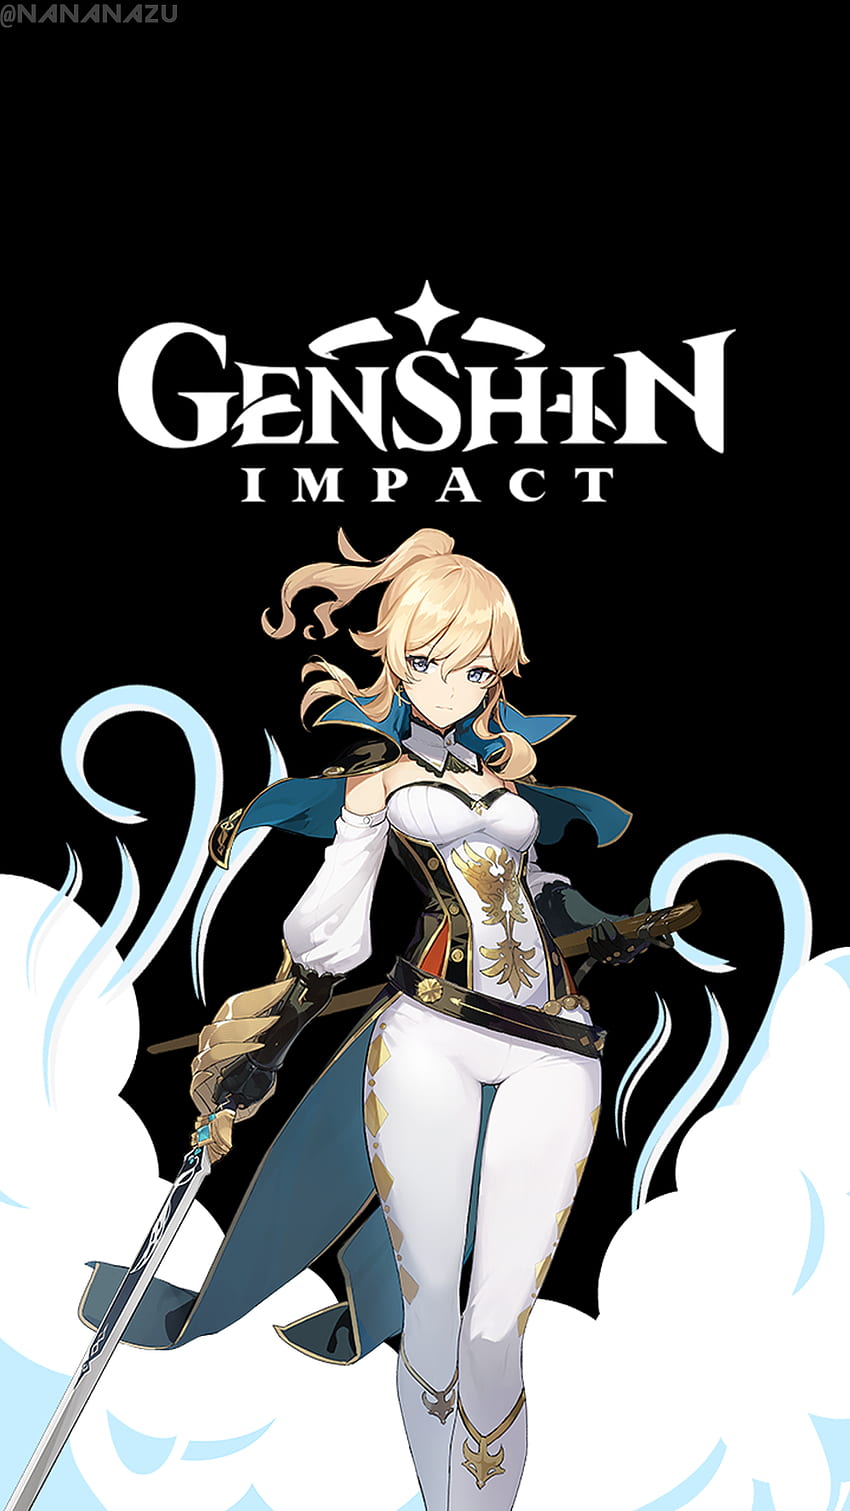 Upcoming open-world mobile MMORPGs similar to Genshin Impact's anime style